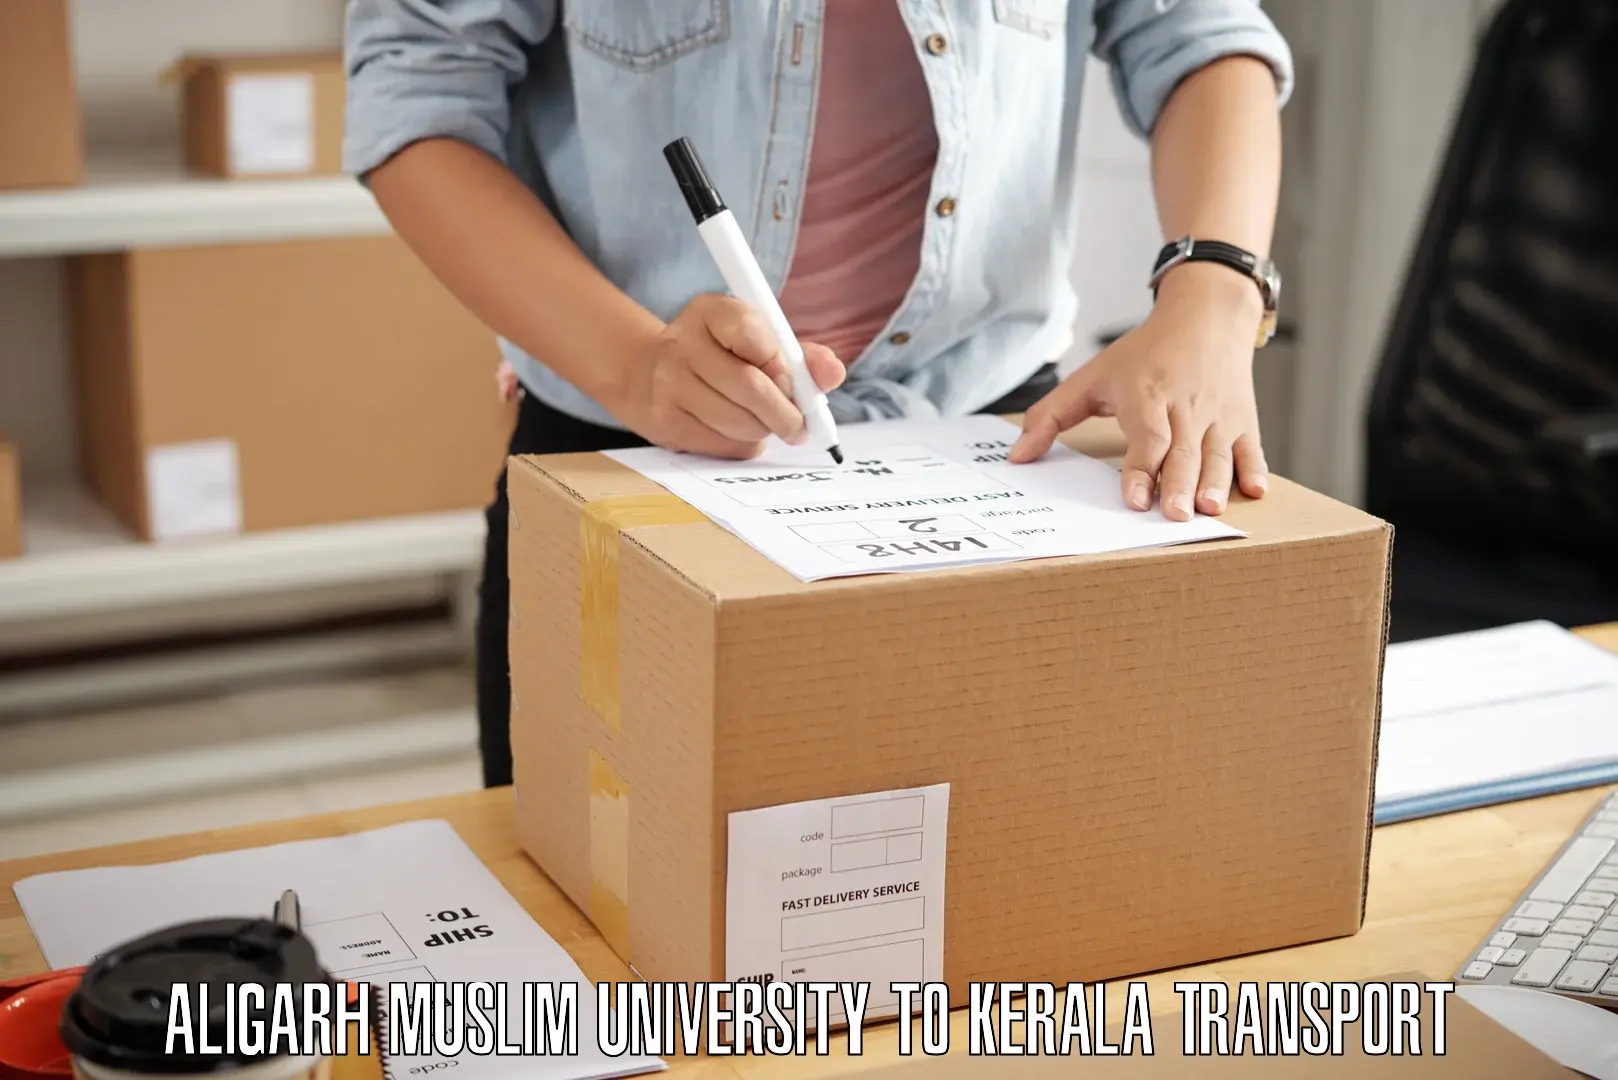 Shipping partner Aligarh Muslim University to IIIT Kottayam